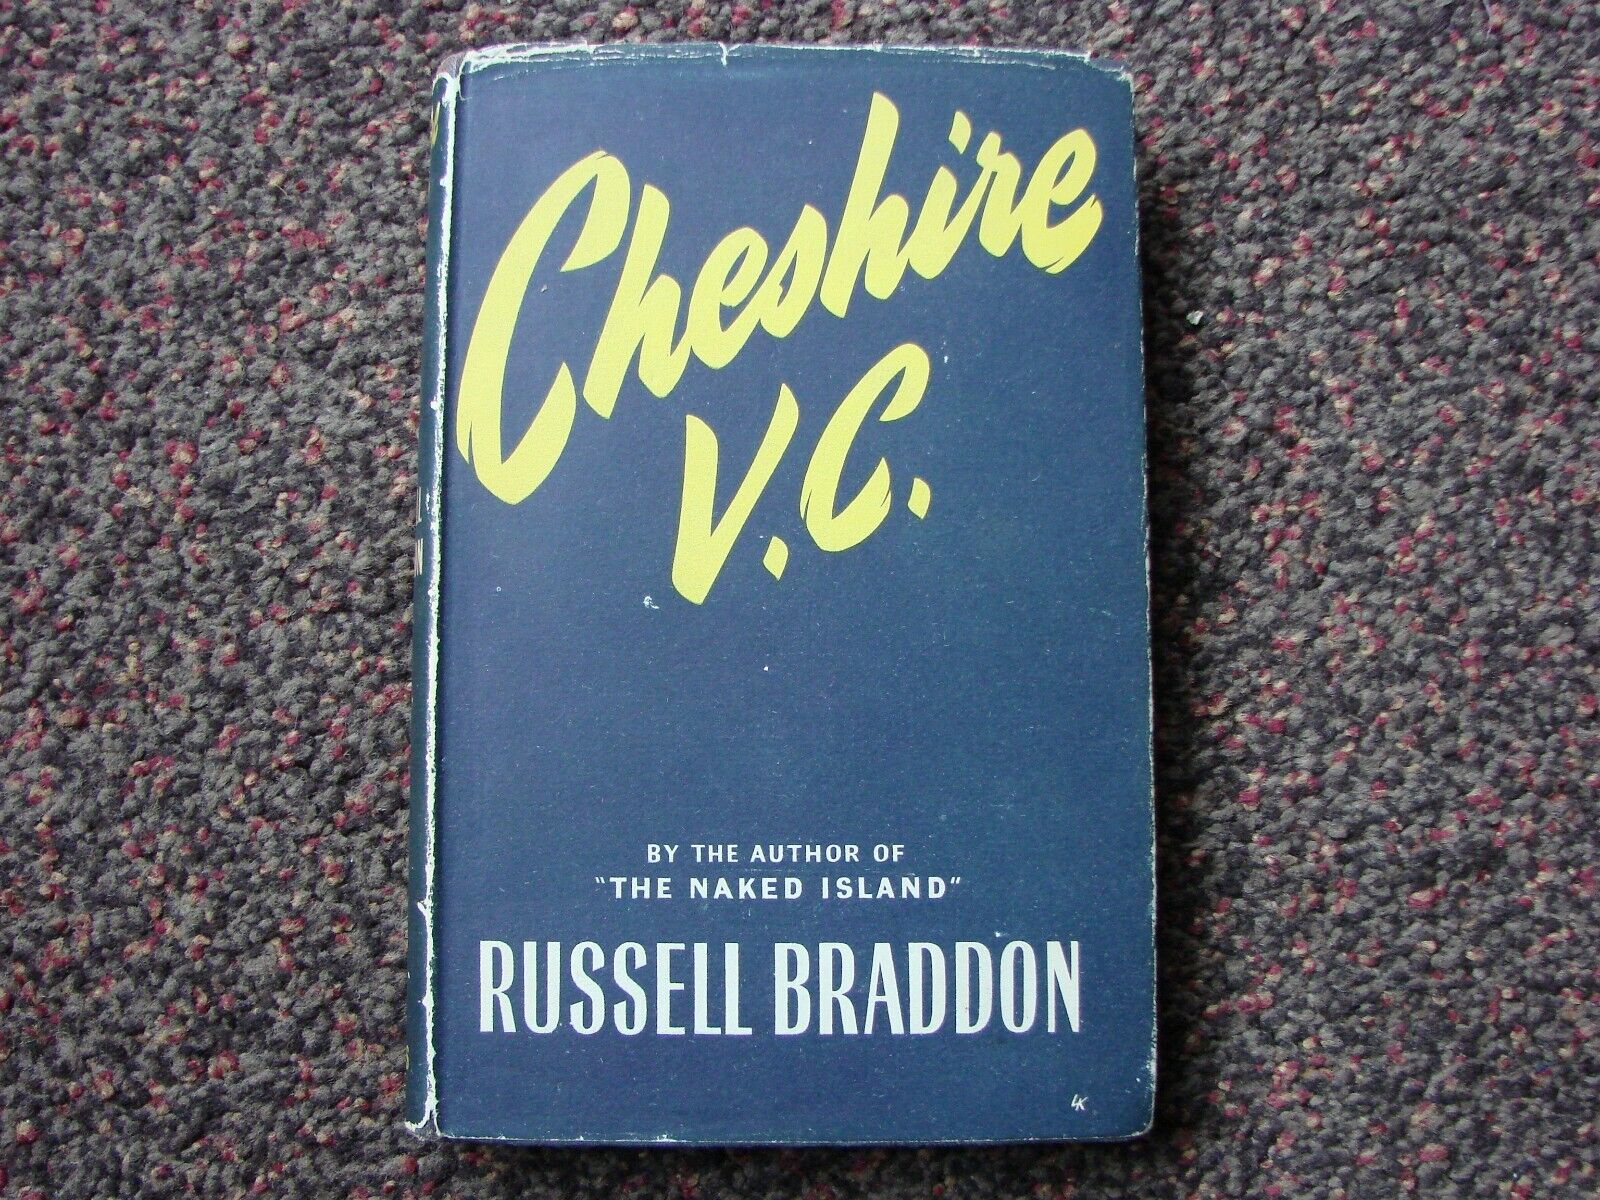 (Leonard) Cheshire V.C. Russell Braddon, illustrated WW2 RAF Bomber Command book